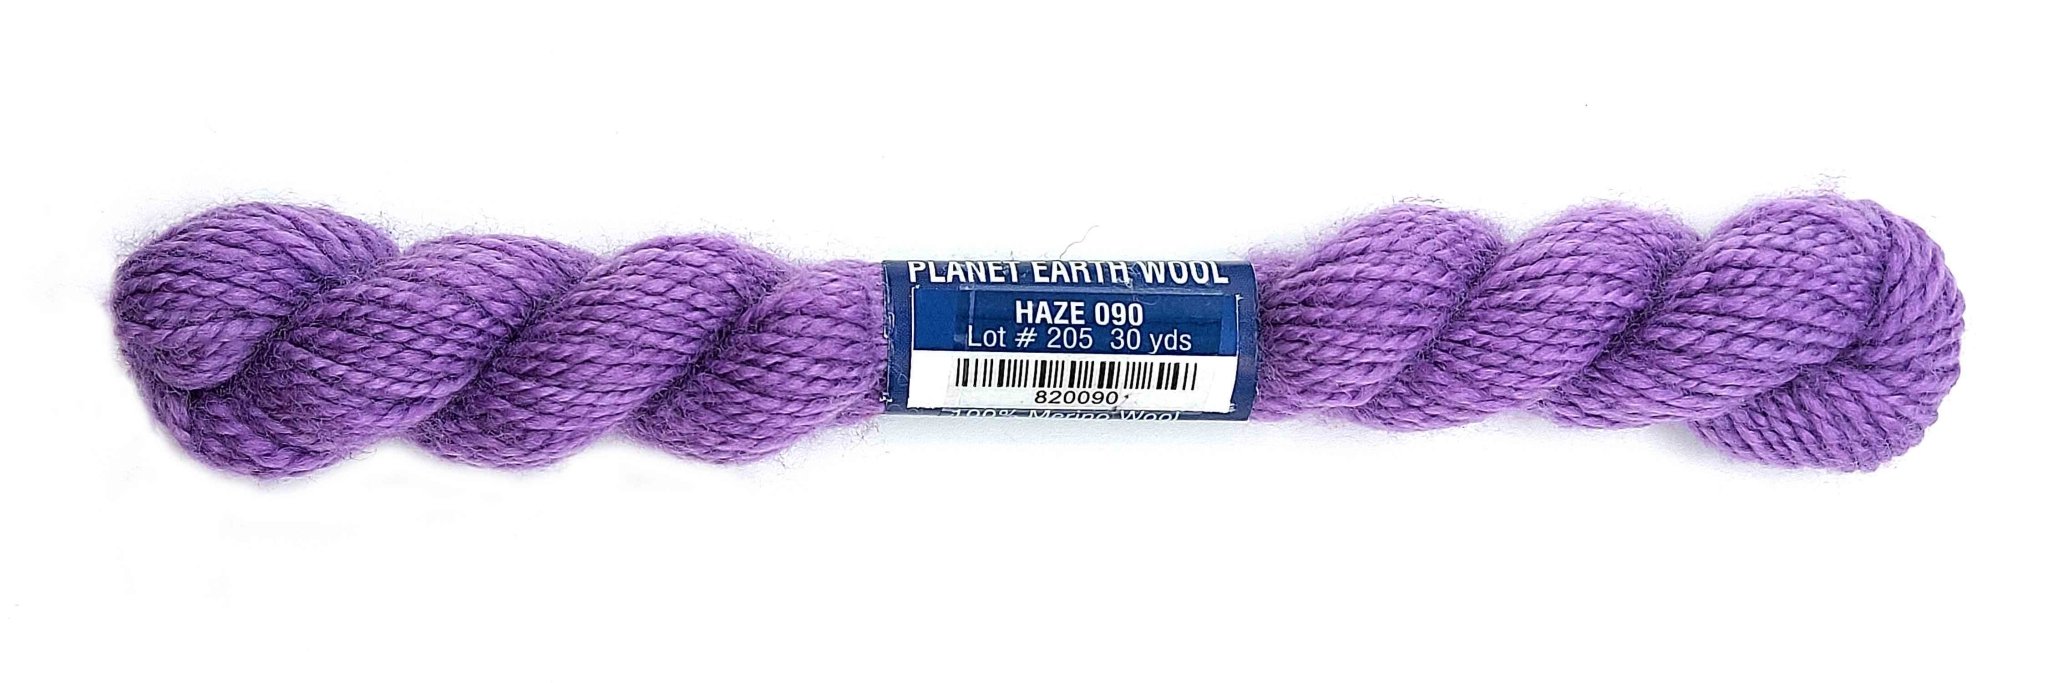 Planet Earth Wool 090 Haze - The Flying Needles